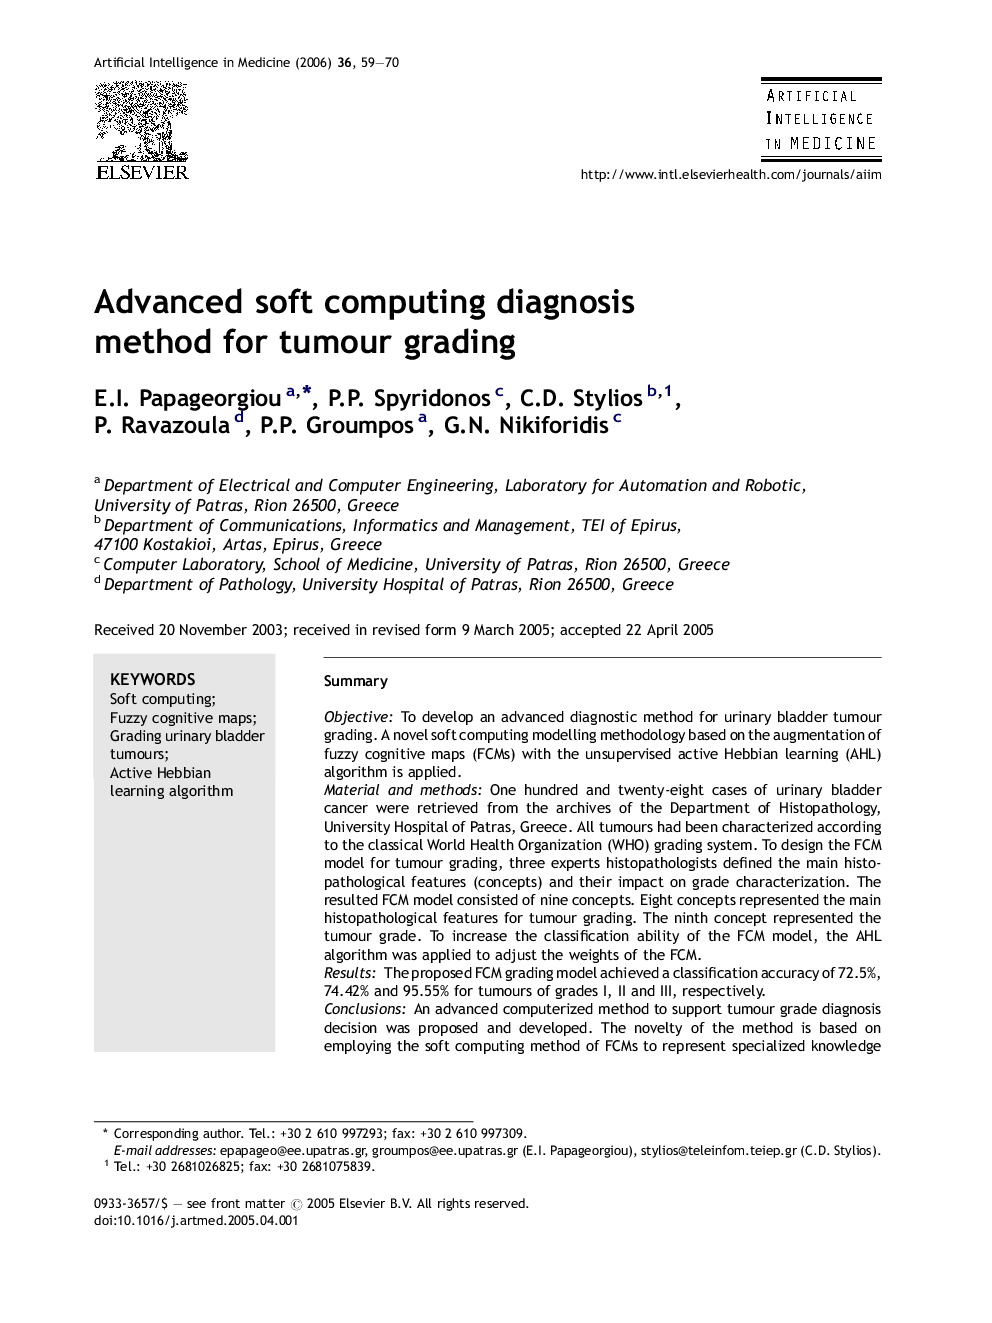 Advanced soft computing diagnosis method for tumour grading